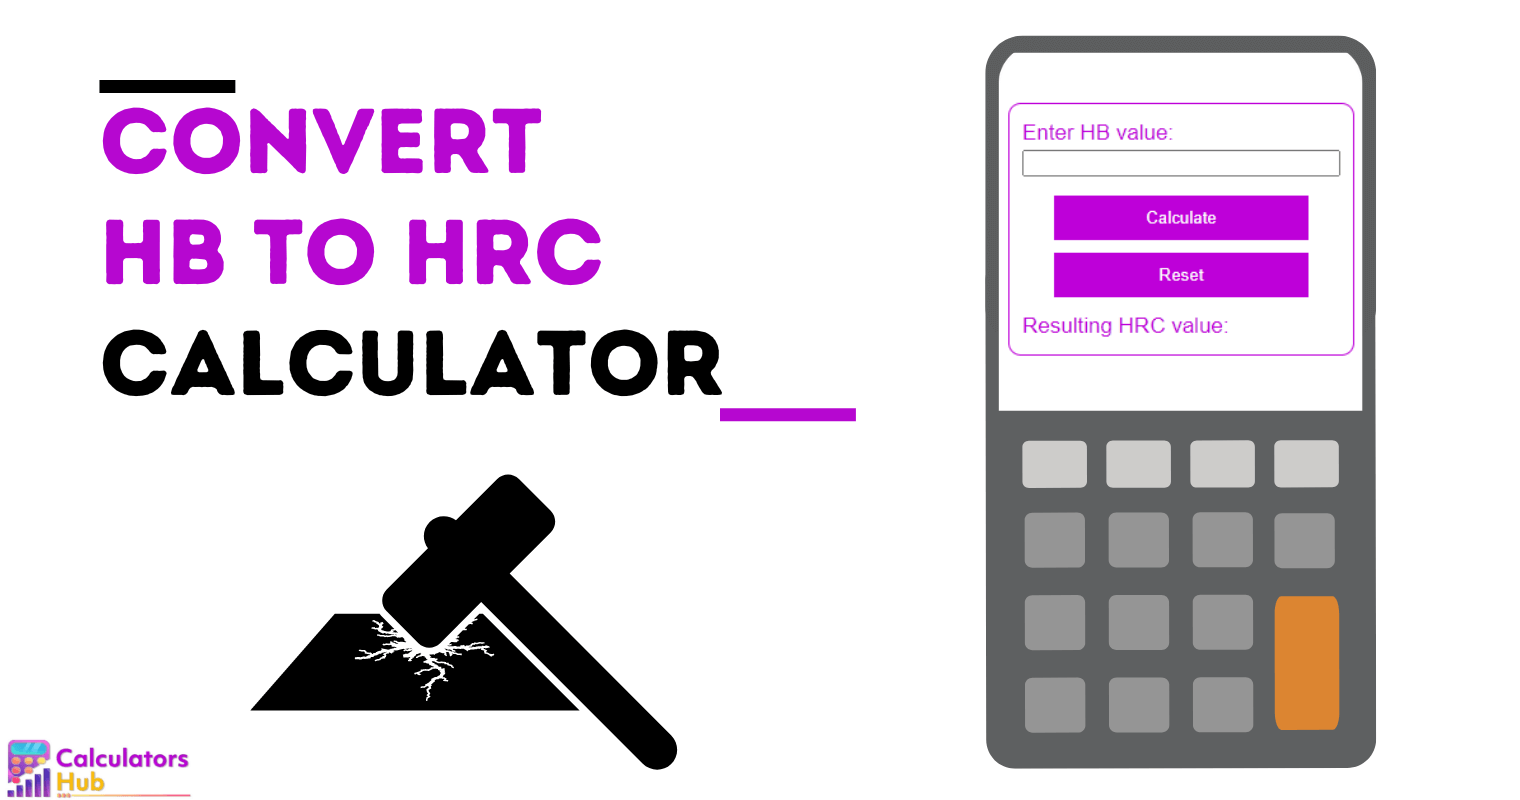 Convert HB to HRC Calculator